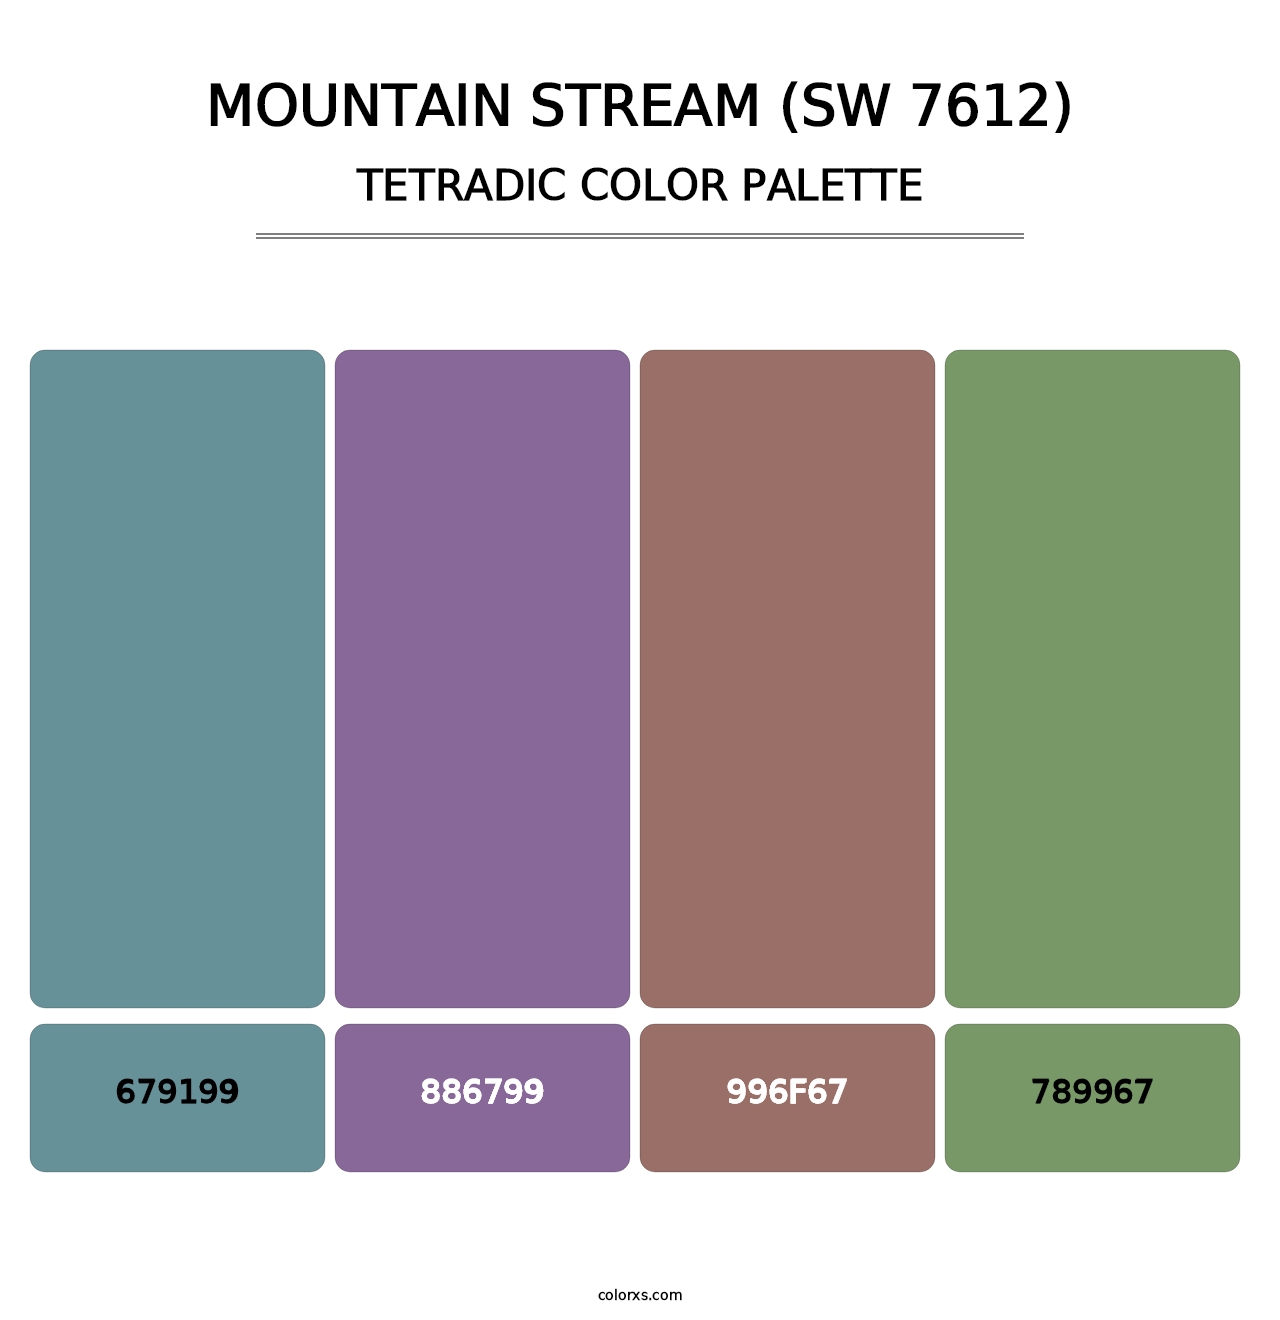 Mountain Stream (SW 7612) - Tetradic Color Palette